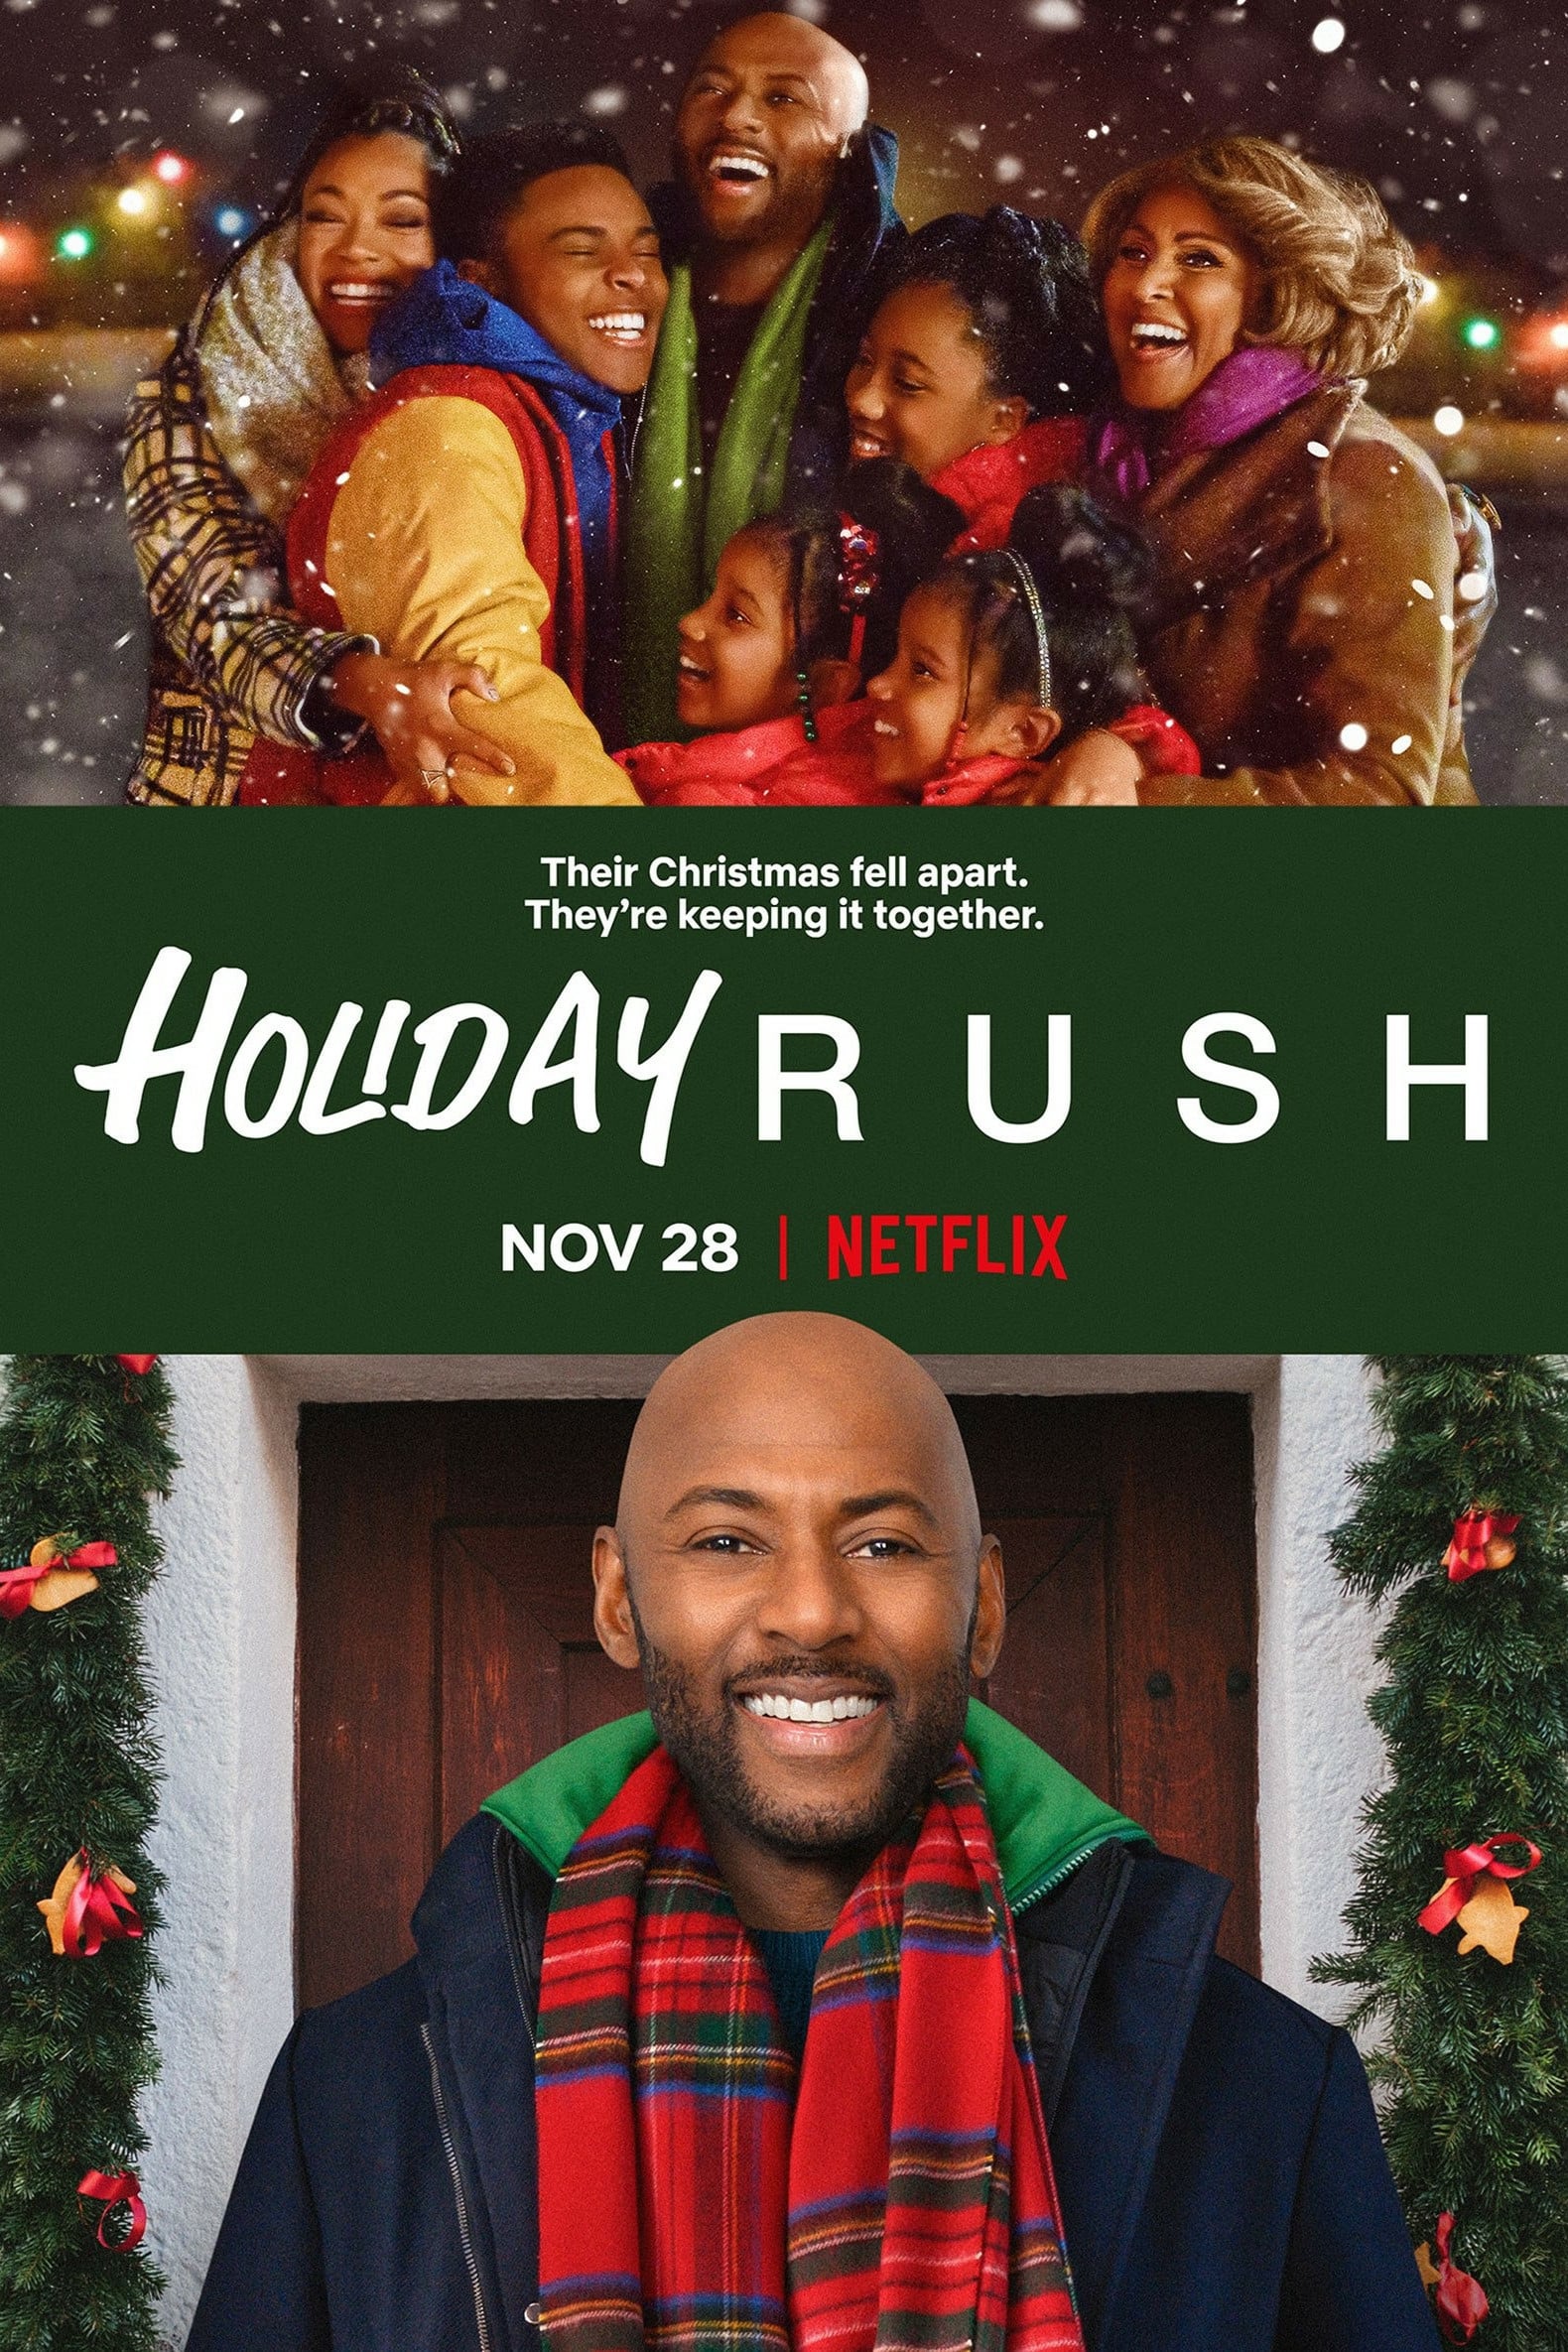 Holiday Rush (2019) ฮอลิเดย์ รัช - ดูหนังออนไลน